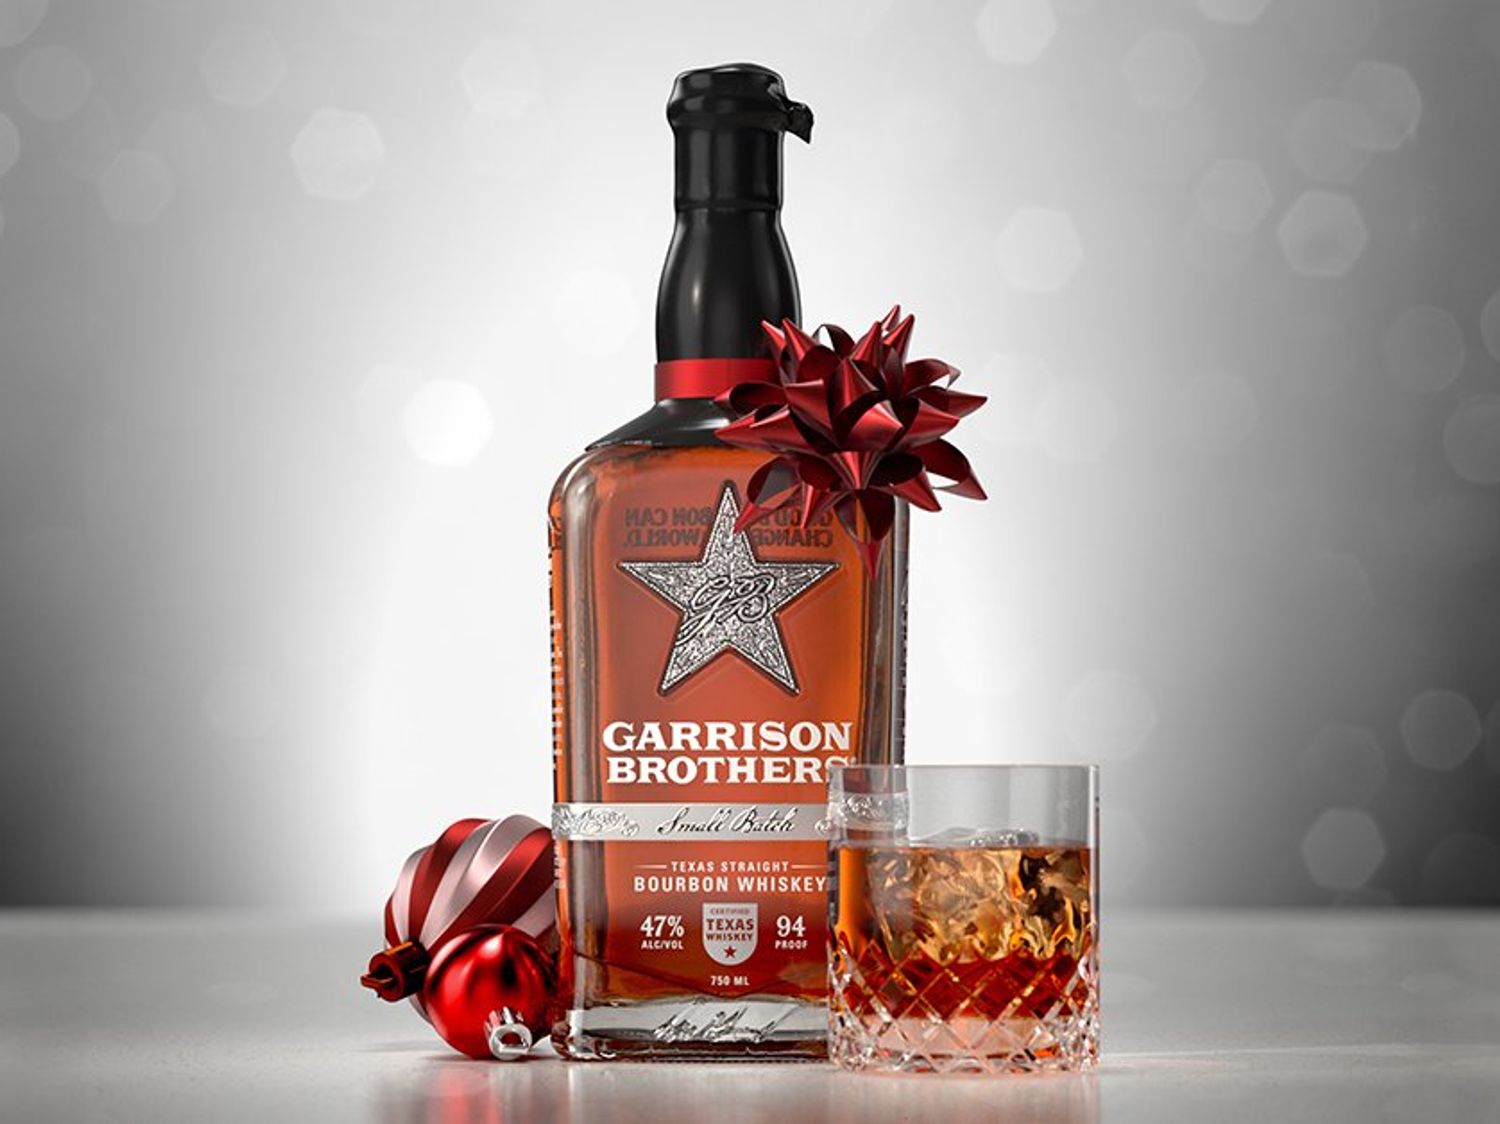 Garrison Brothers bourbon